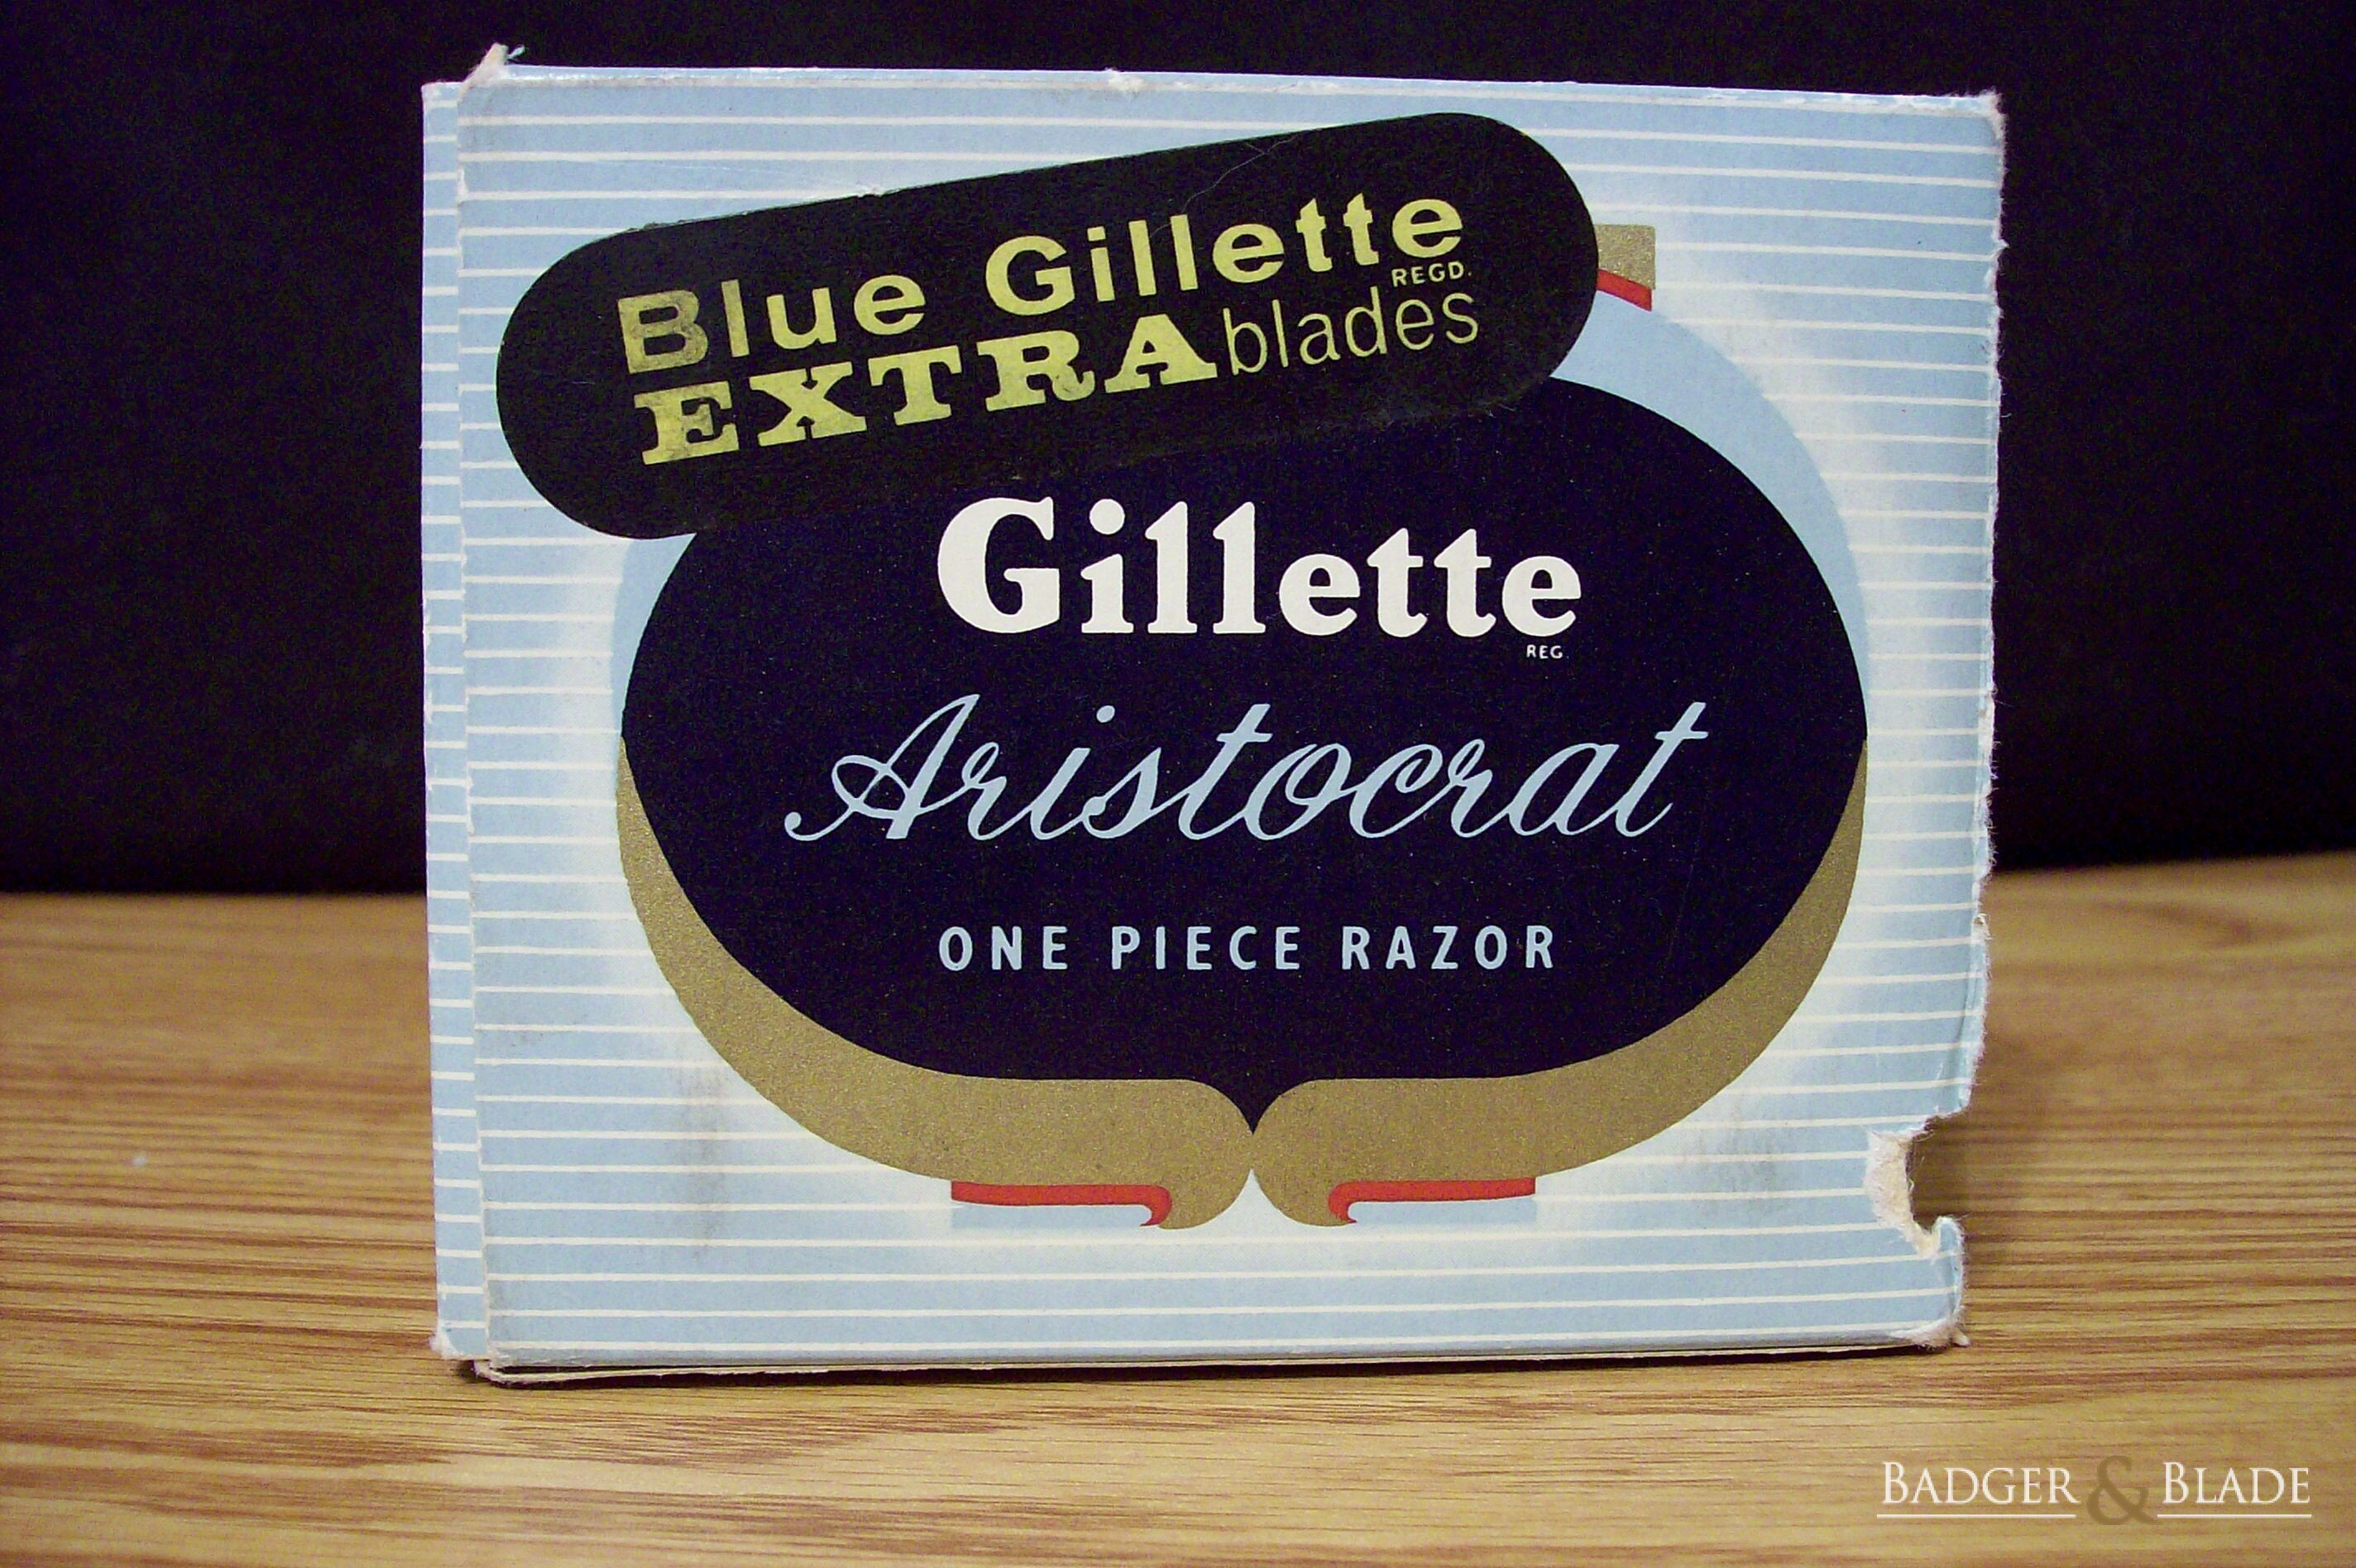 Gillette English #66